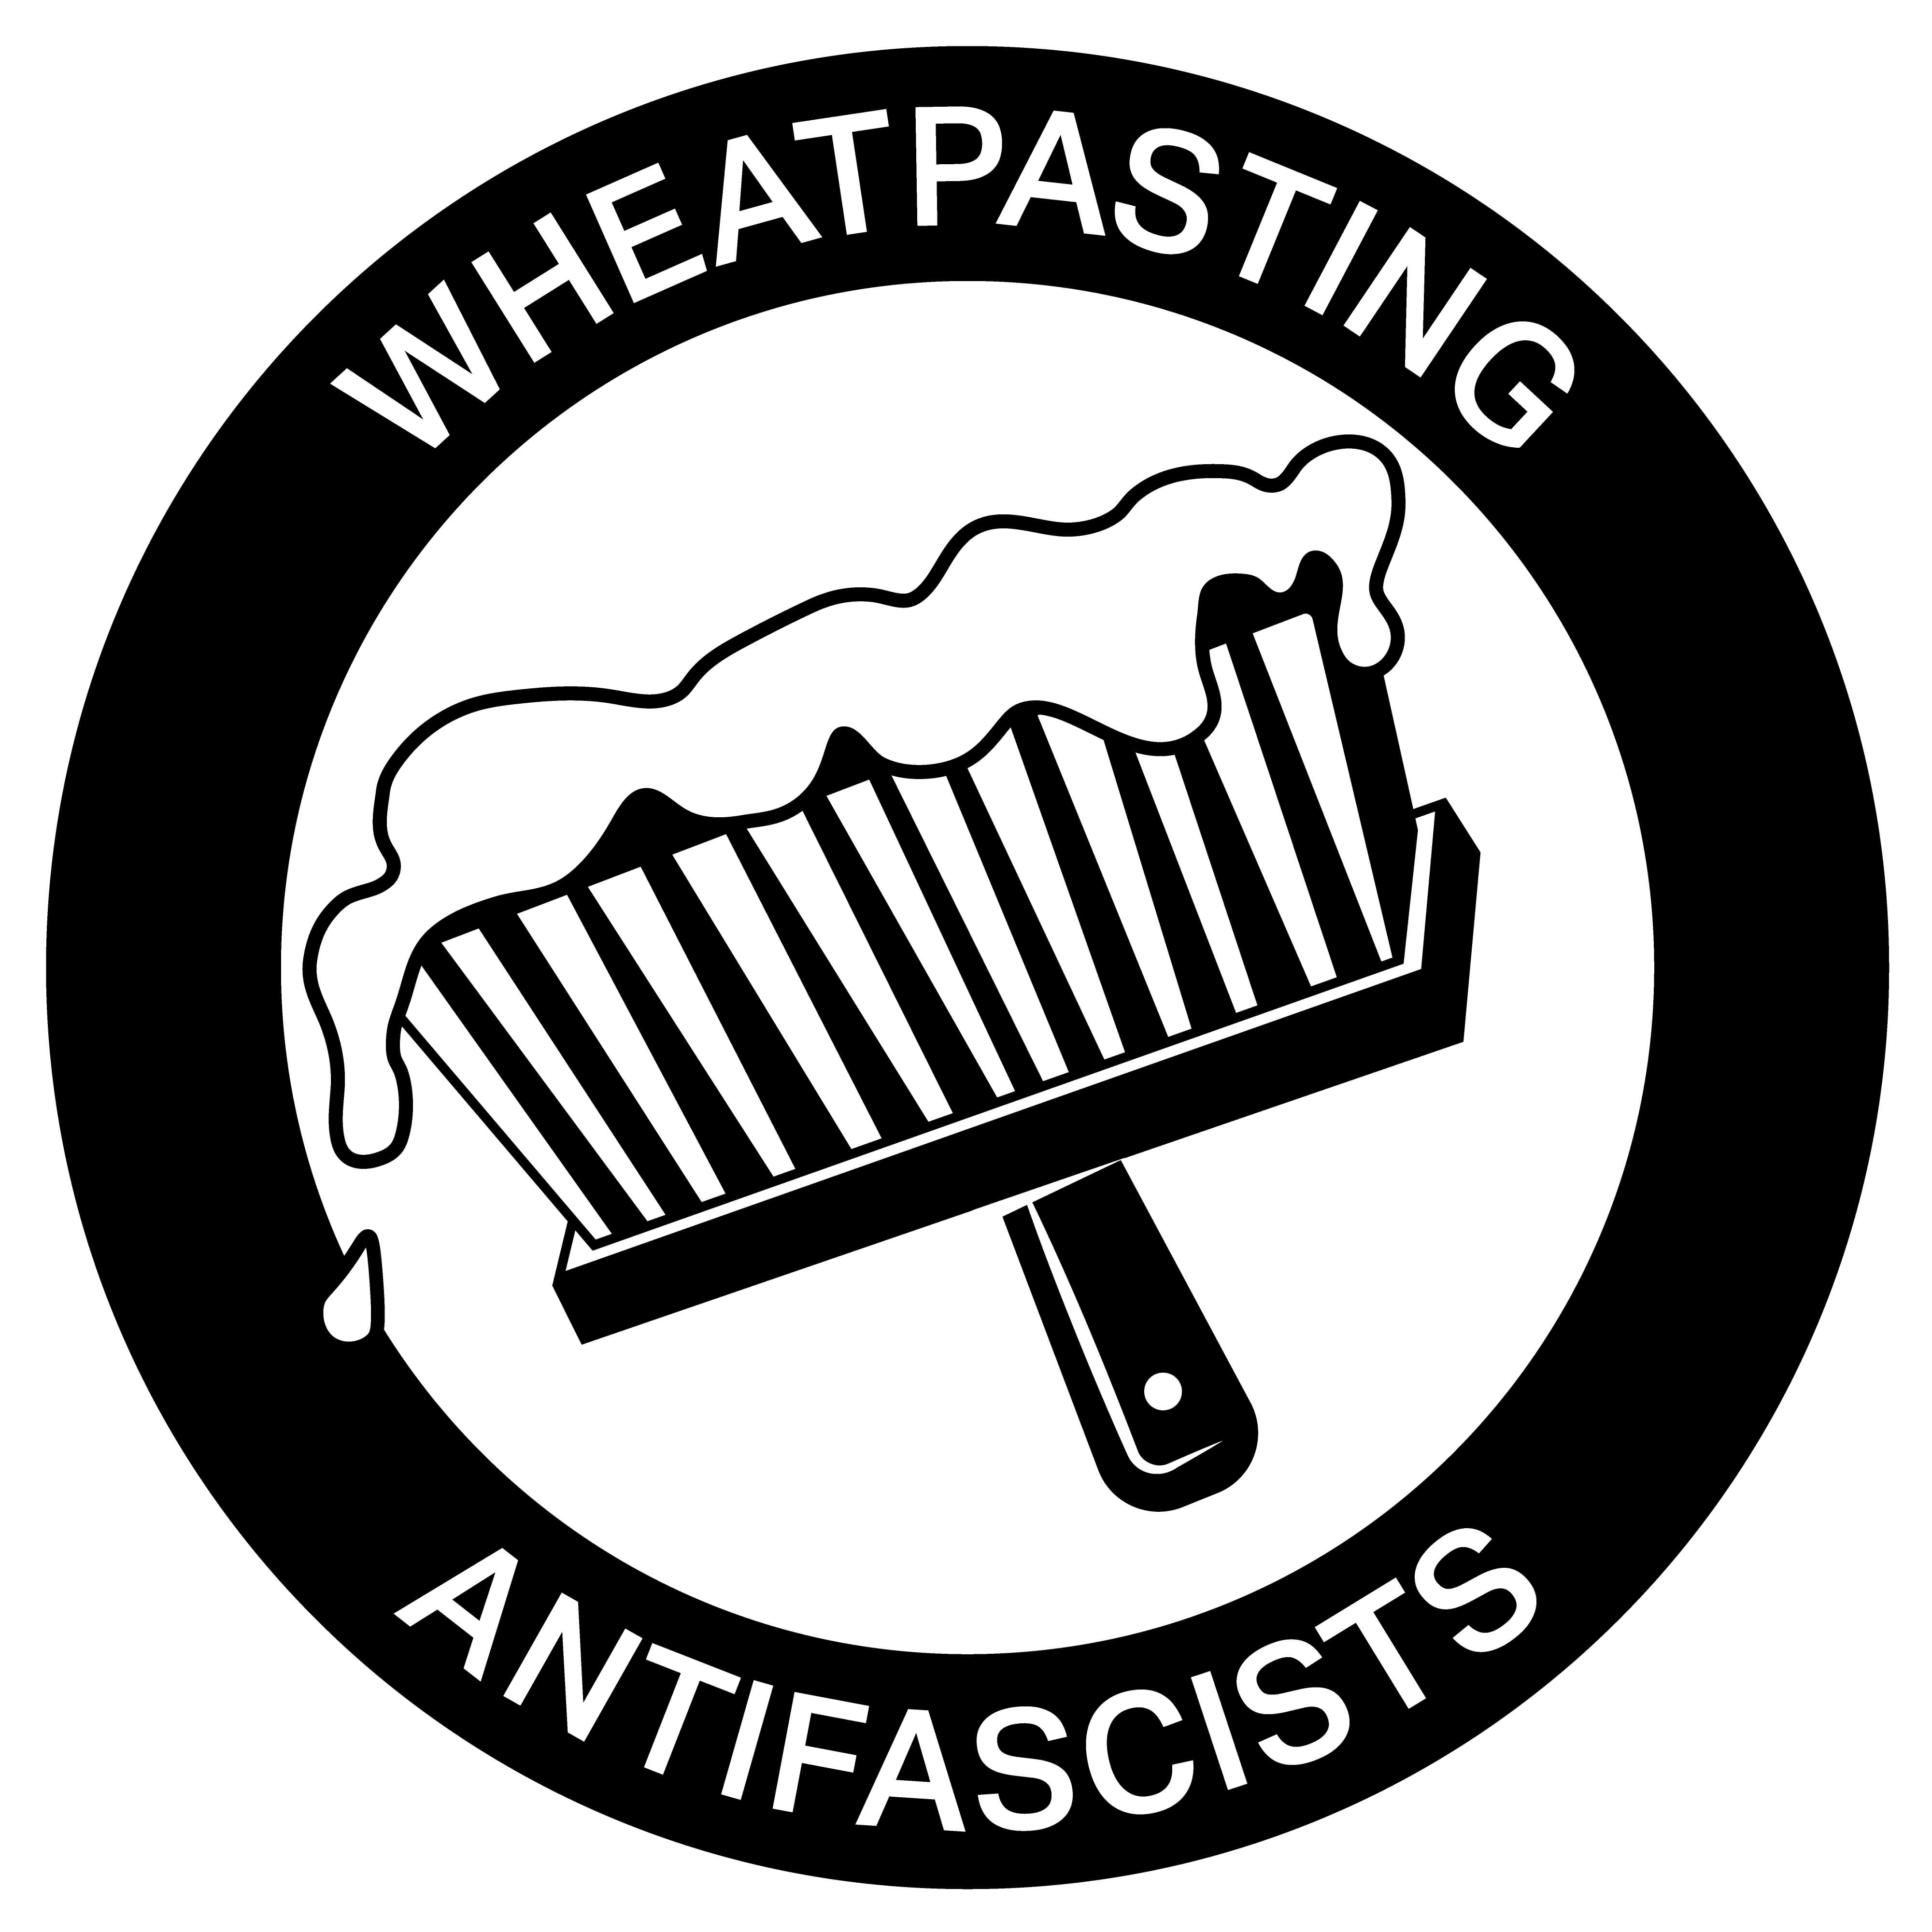 Wheatpasting Antifascists black